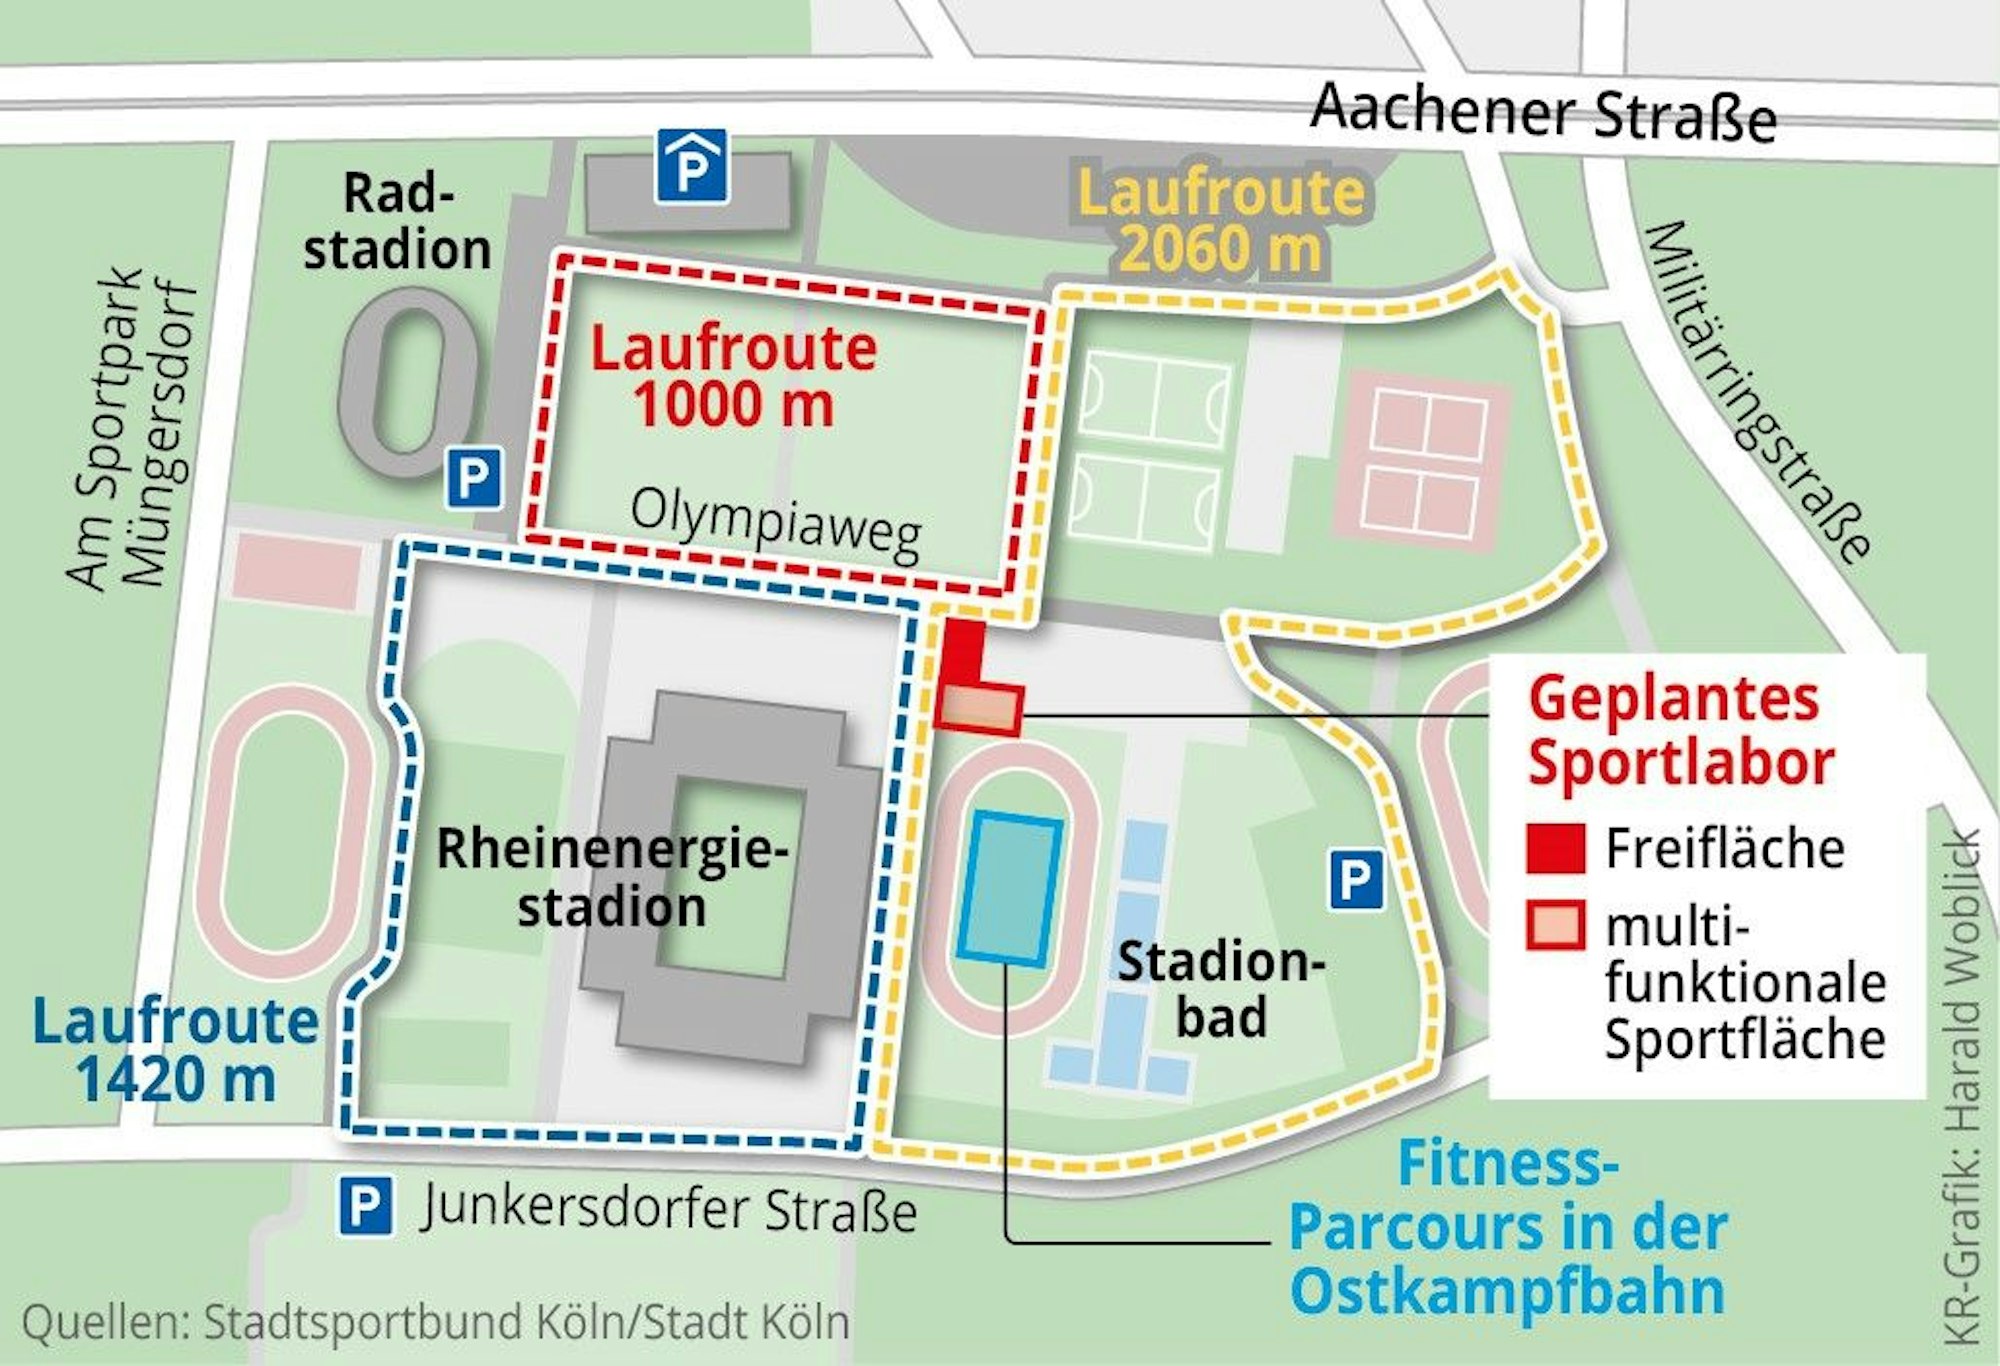 Grafik zum Sportpark Müngersdorf mit geplantem neuem Sportlabor